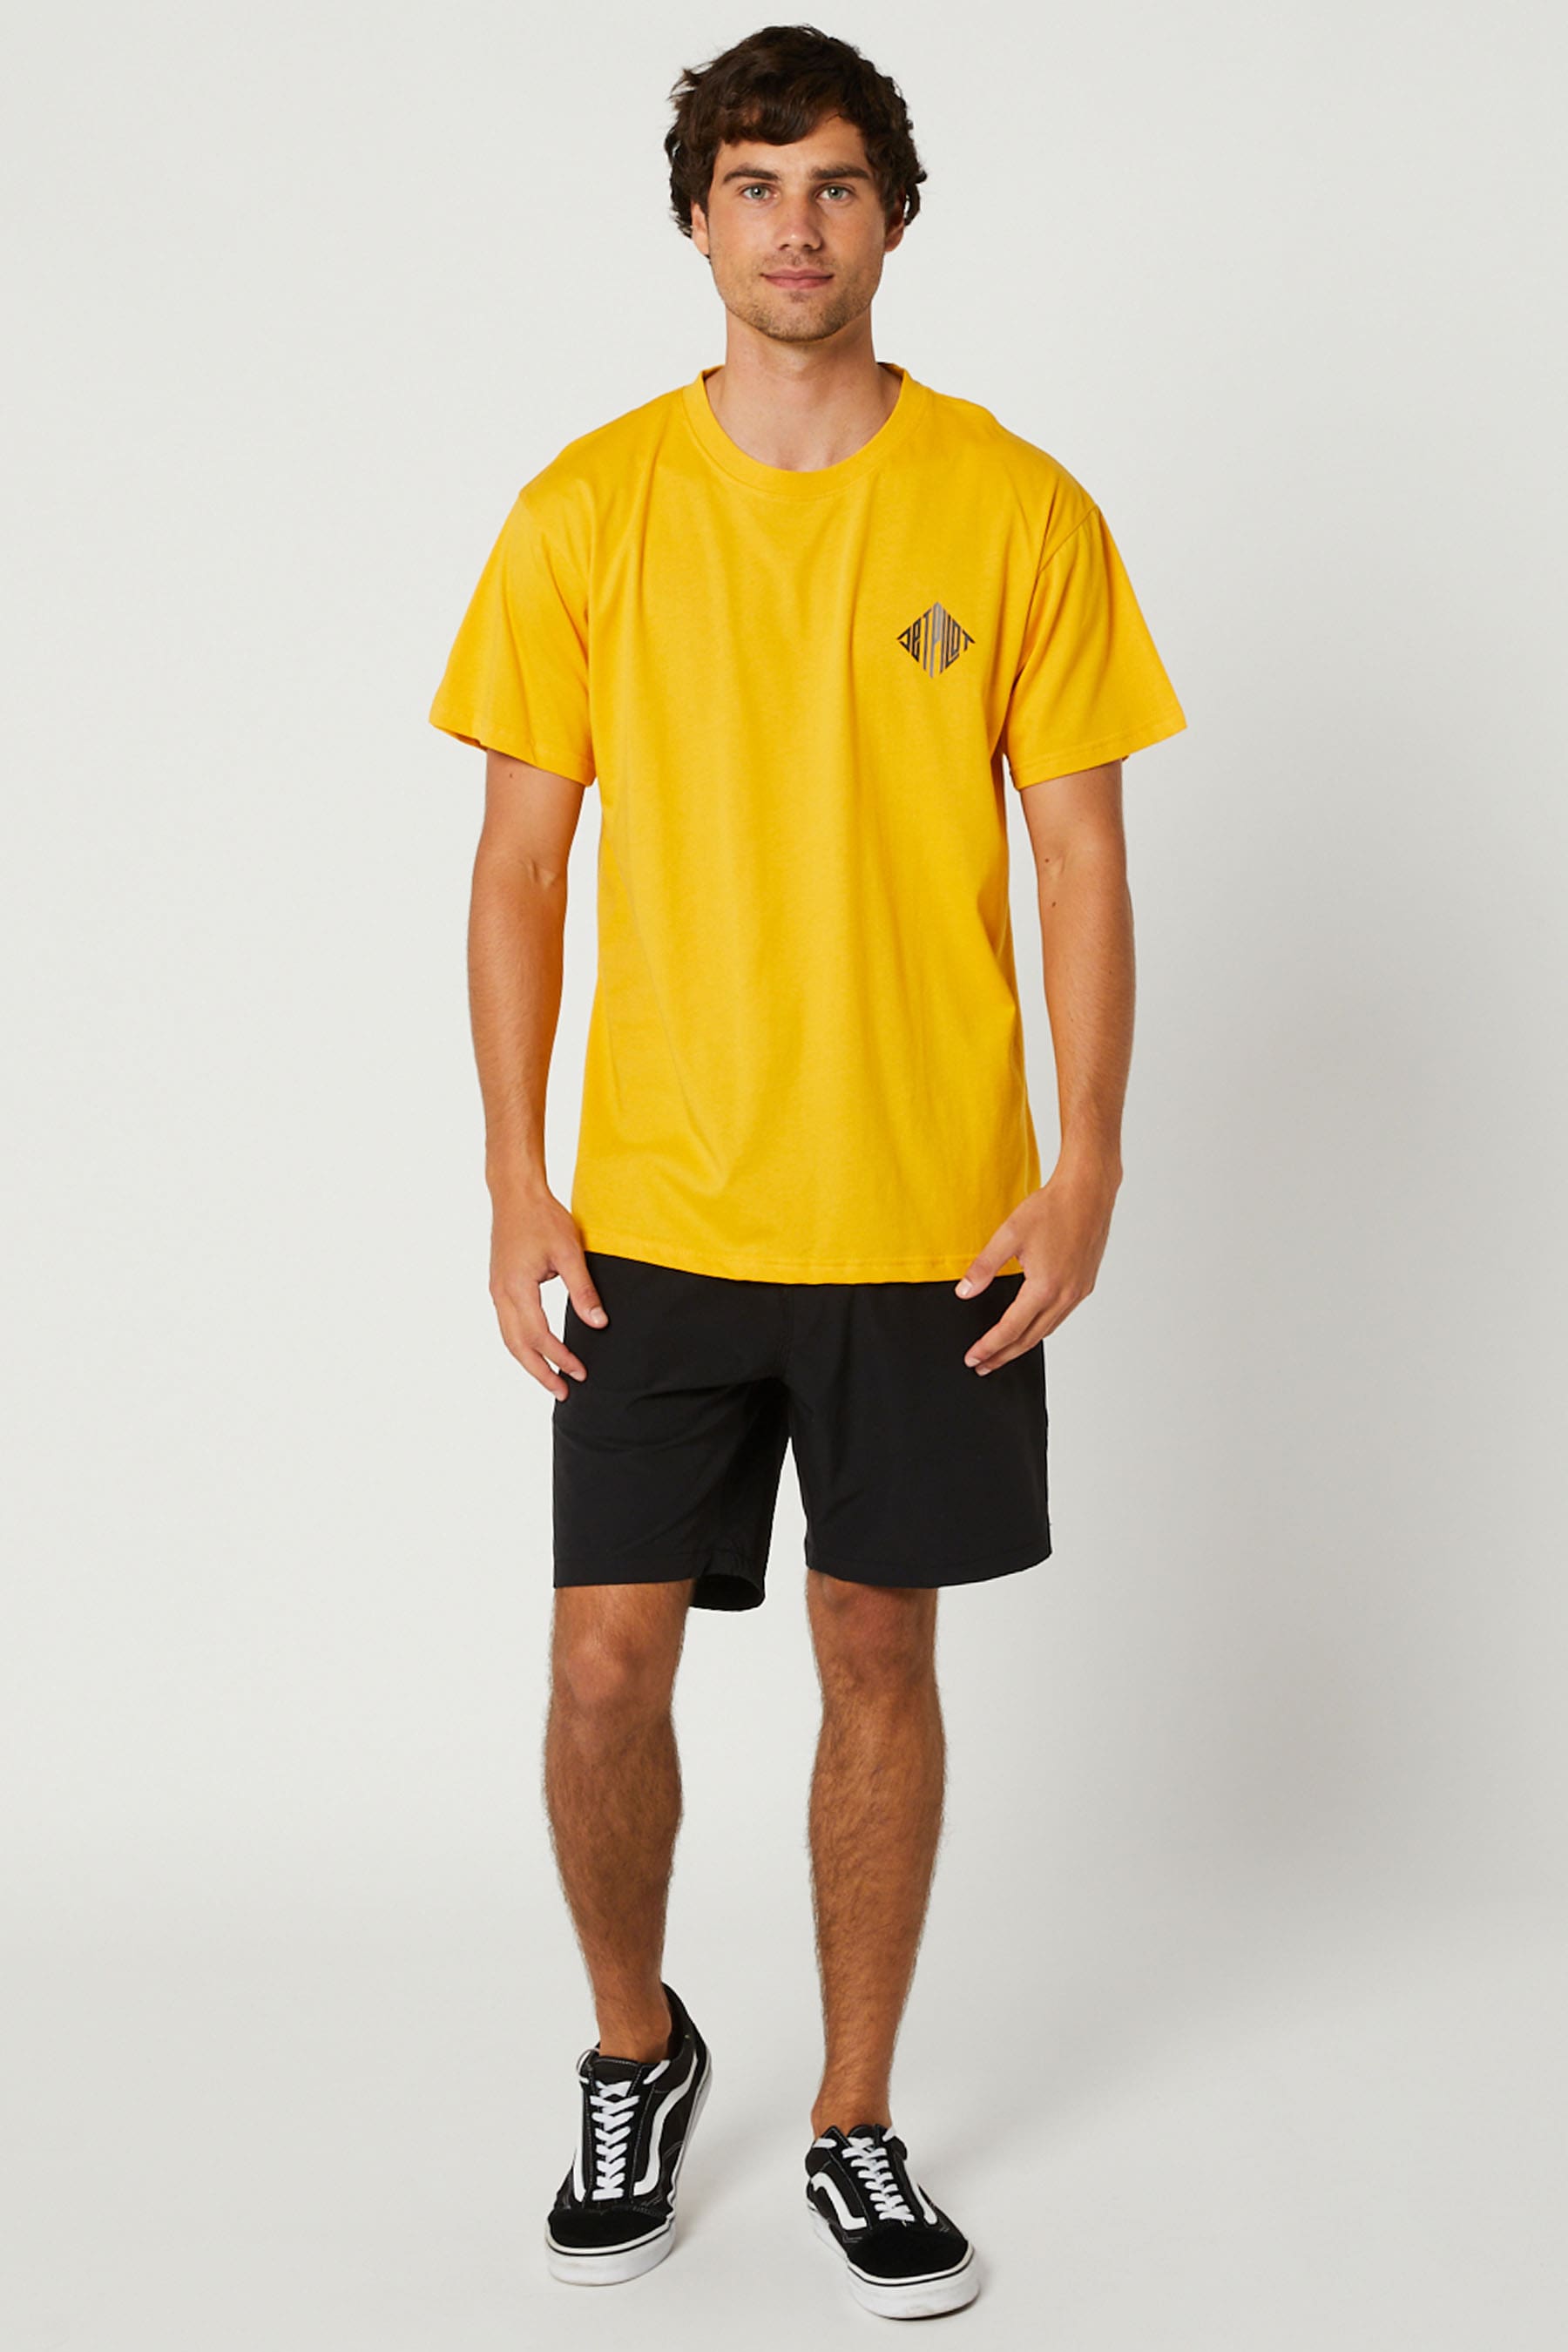 Imprint Mens SS T-Shirt Yellow 5